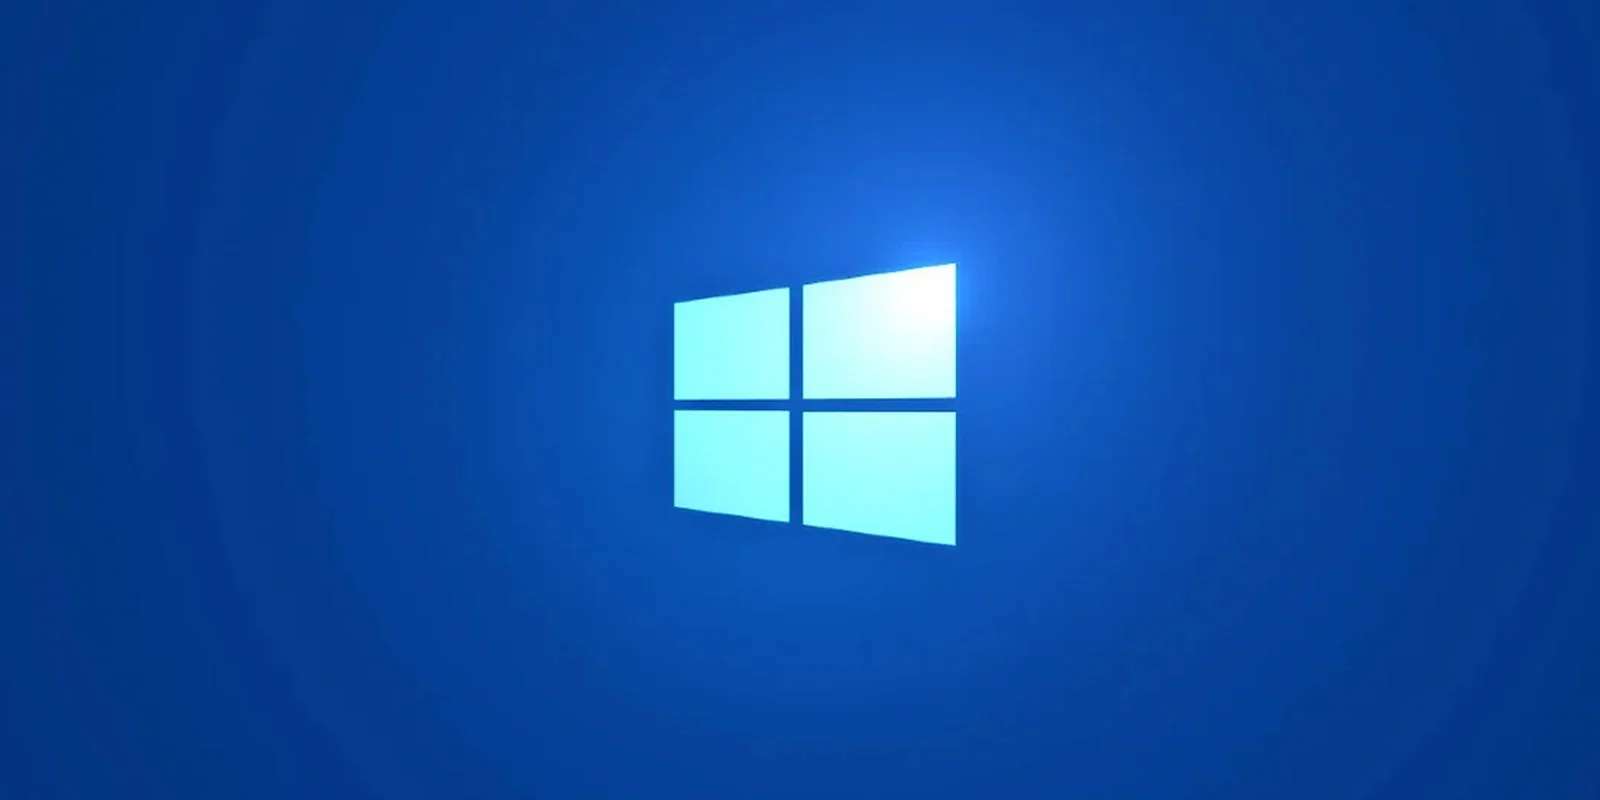 How to Do a Fresh Install of Windows 10?